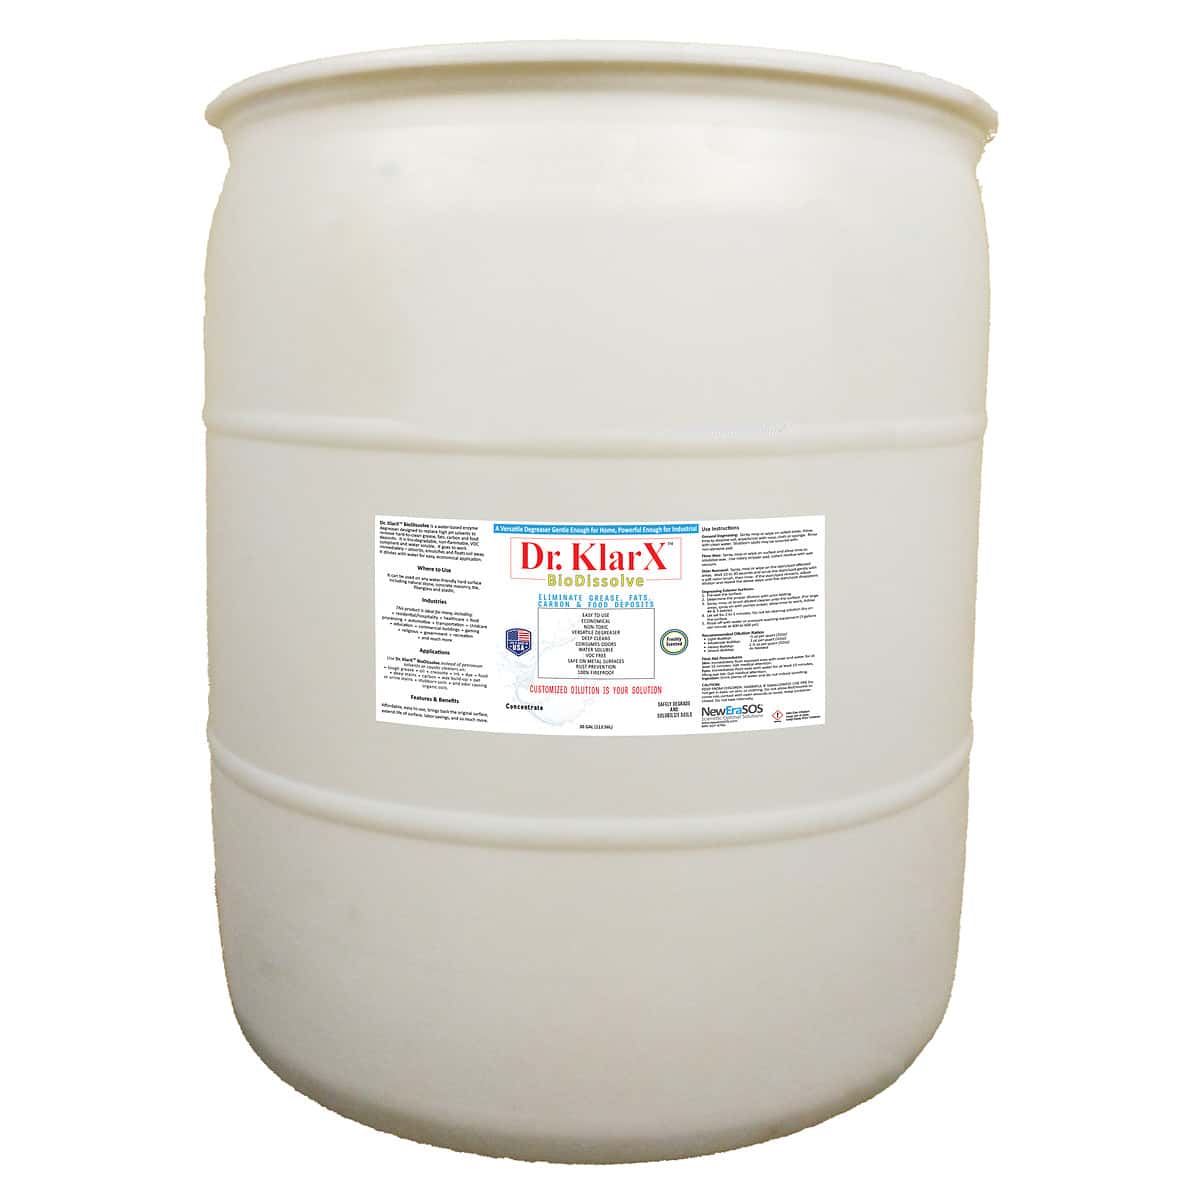 Dr. KlarX BioDissolve Versatile Cleaner and Degreaser 30-gallon Drum